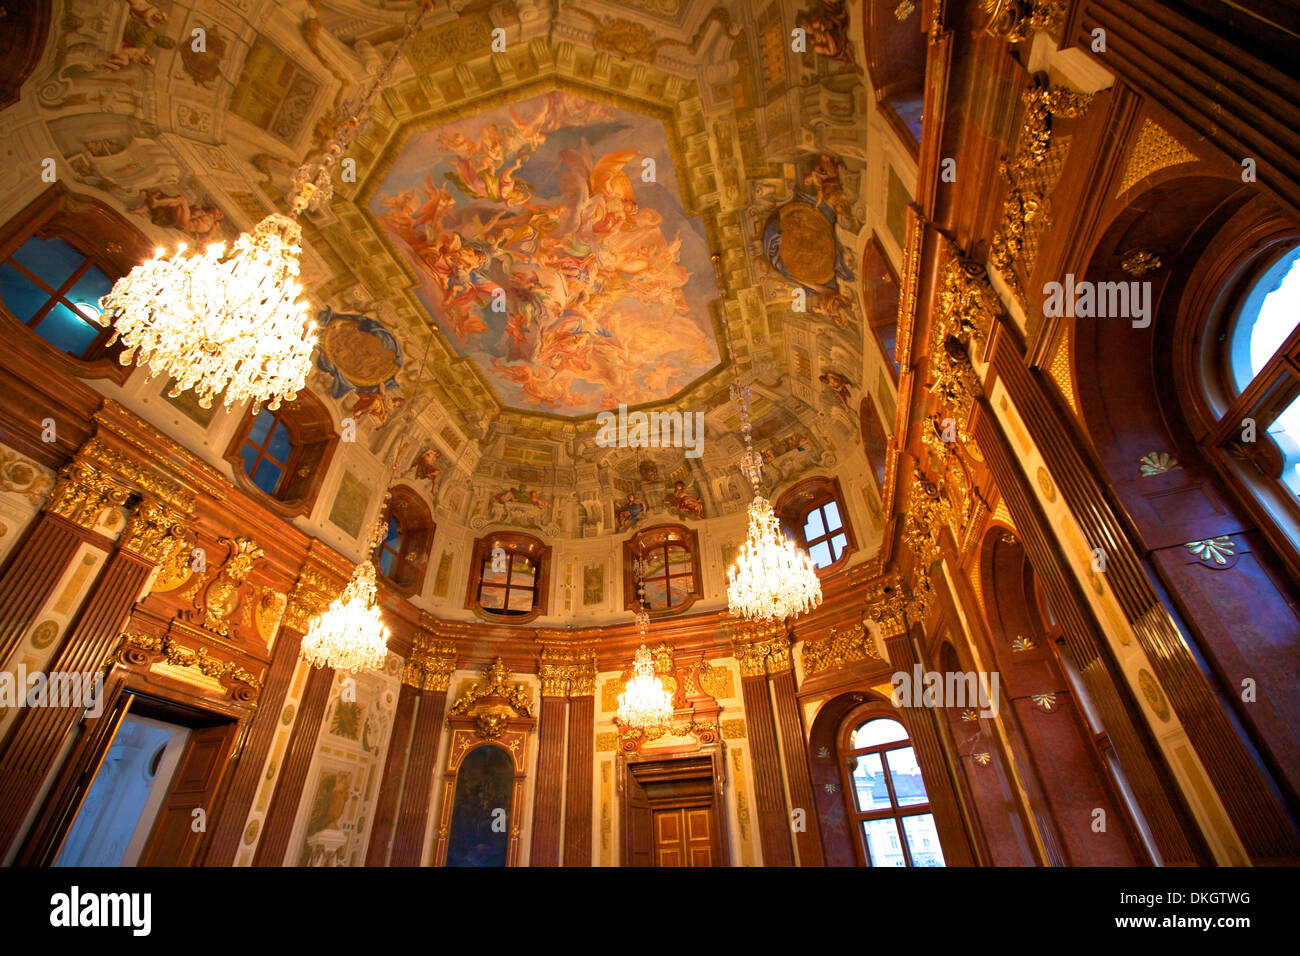 Arrest Sleeping Recite Interior of Belvedere Palace, UNESCO World Heritage Site, Vienna, Austria,  Europe Stock Photo - Alamy